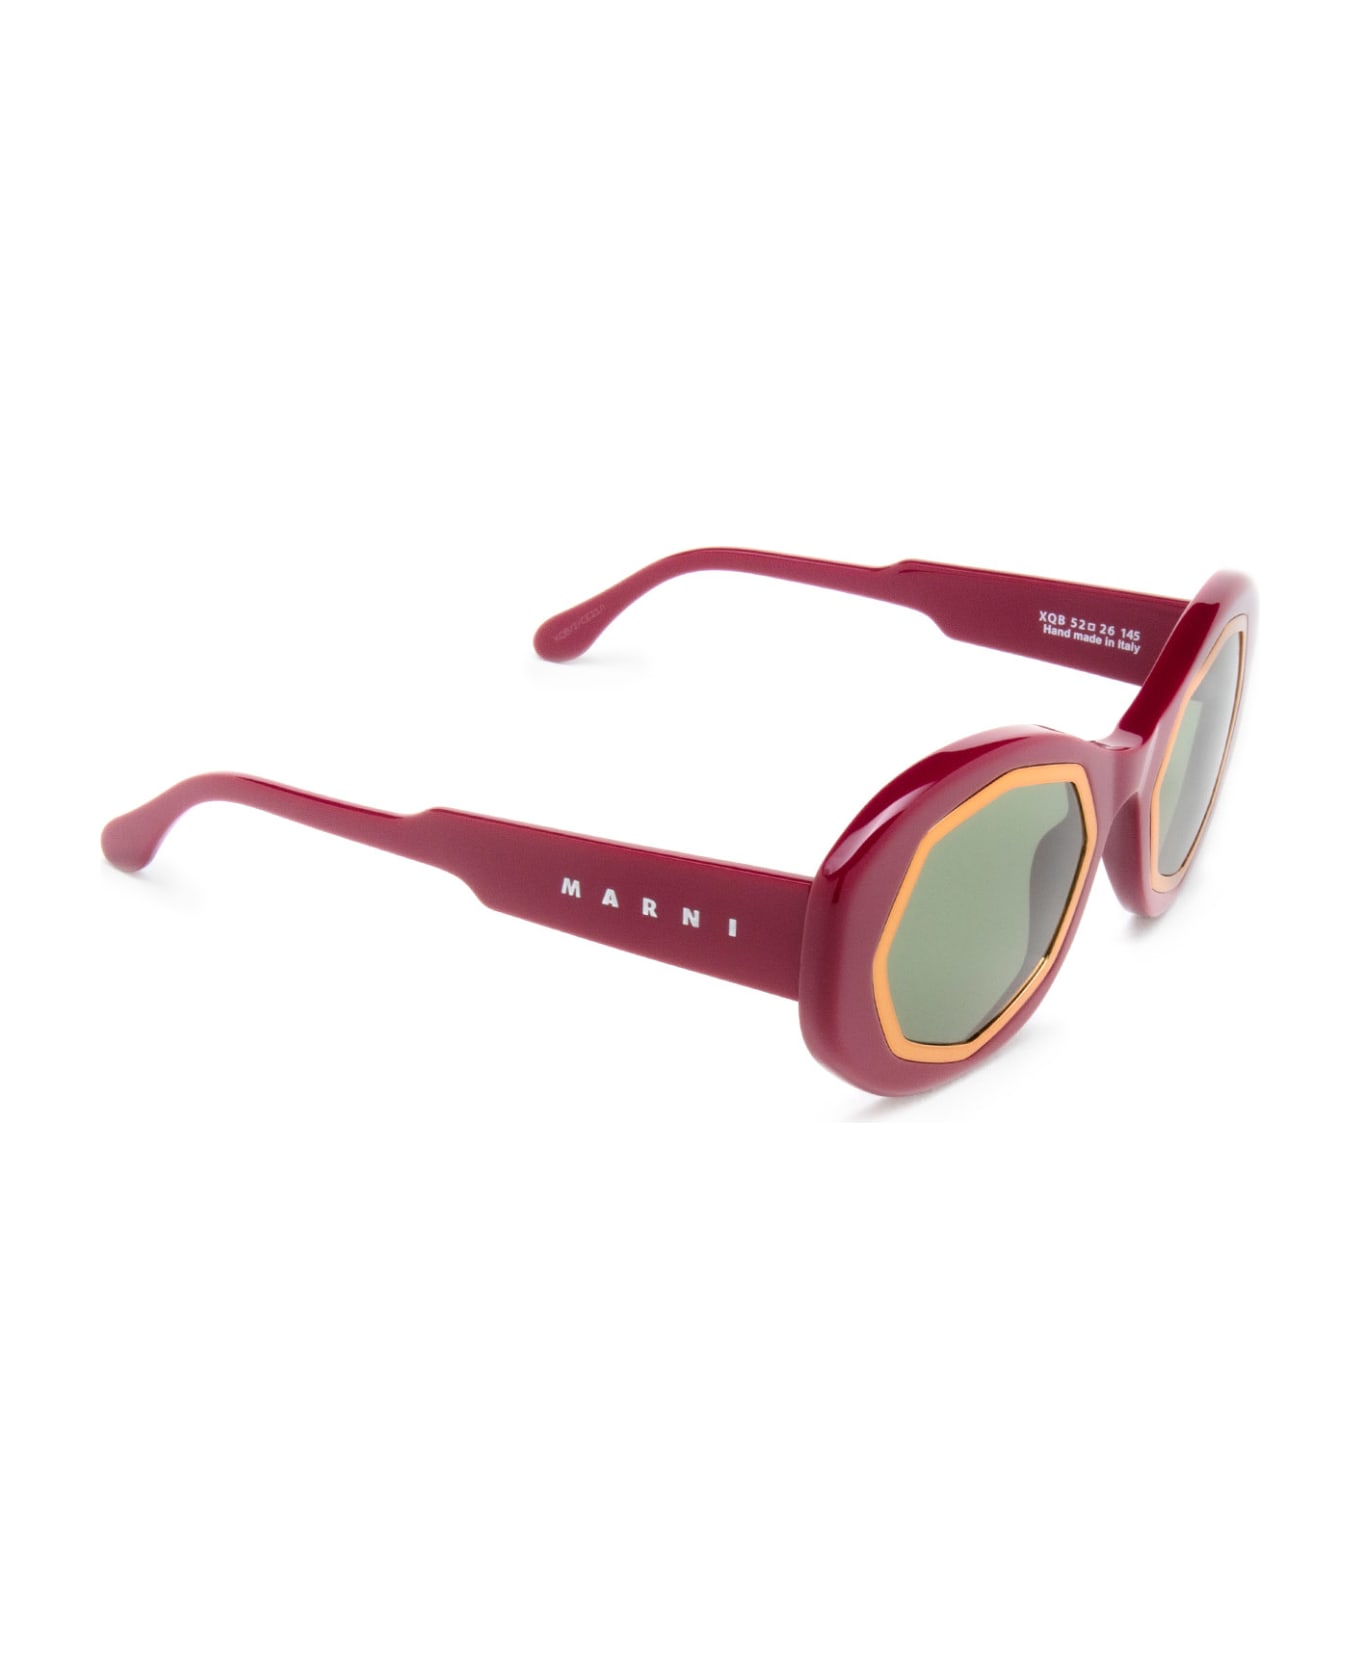 Marni Eyewear Mount Bromo Bordeaux Sunglasses - Bordeaux サングラス